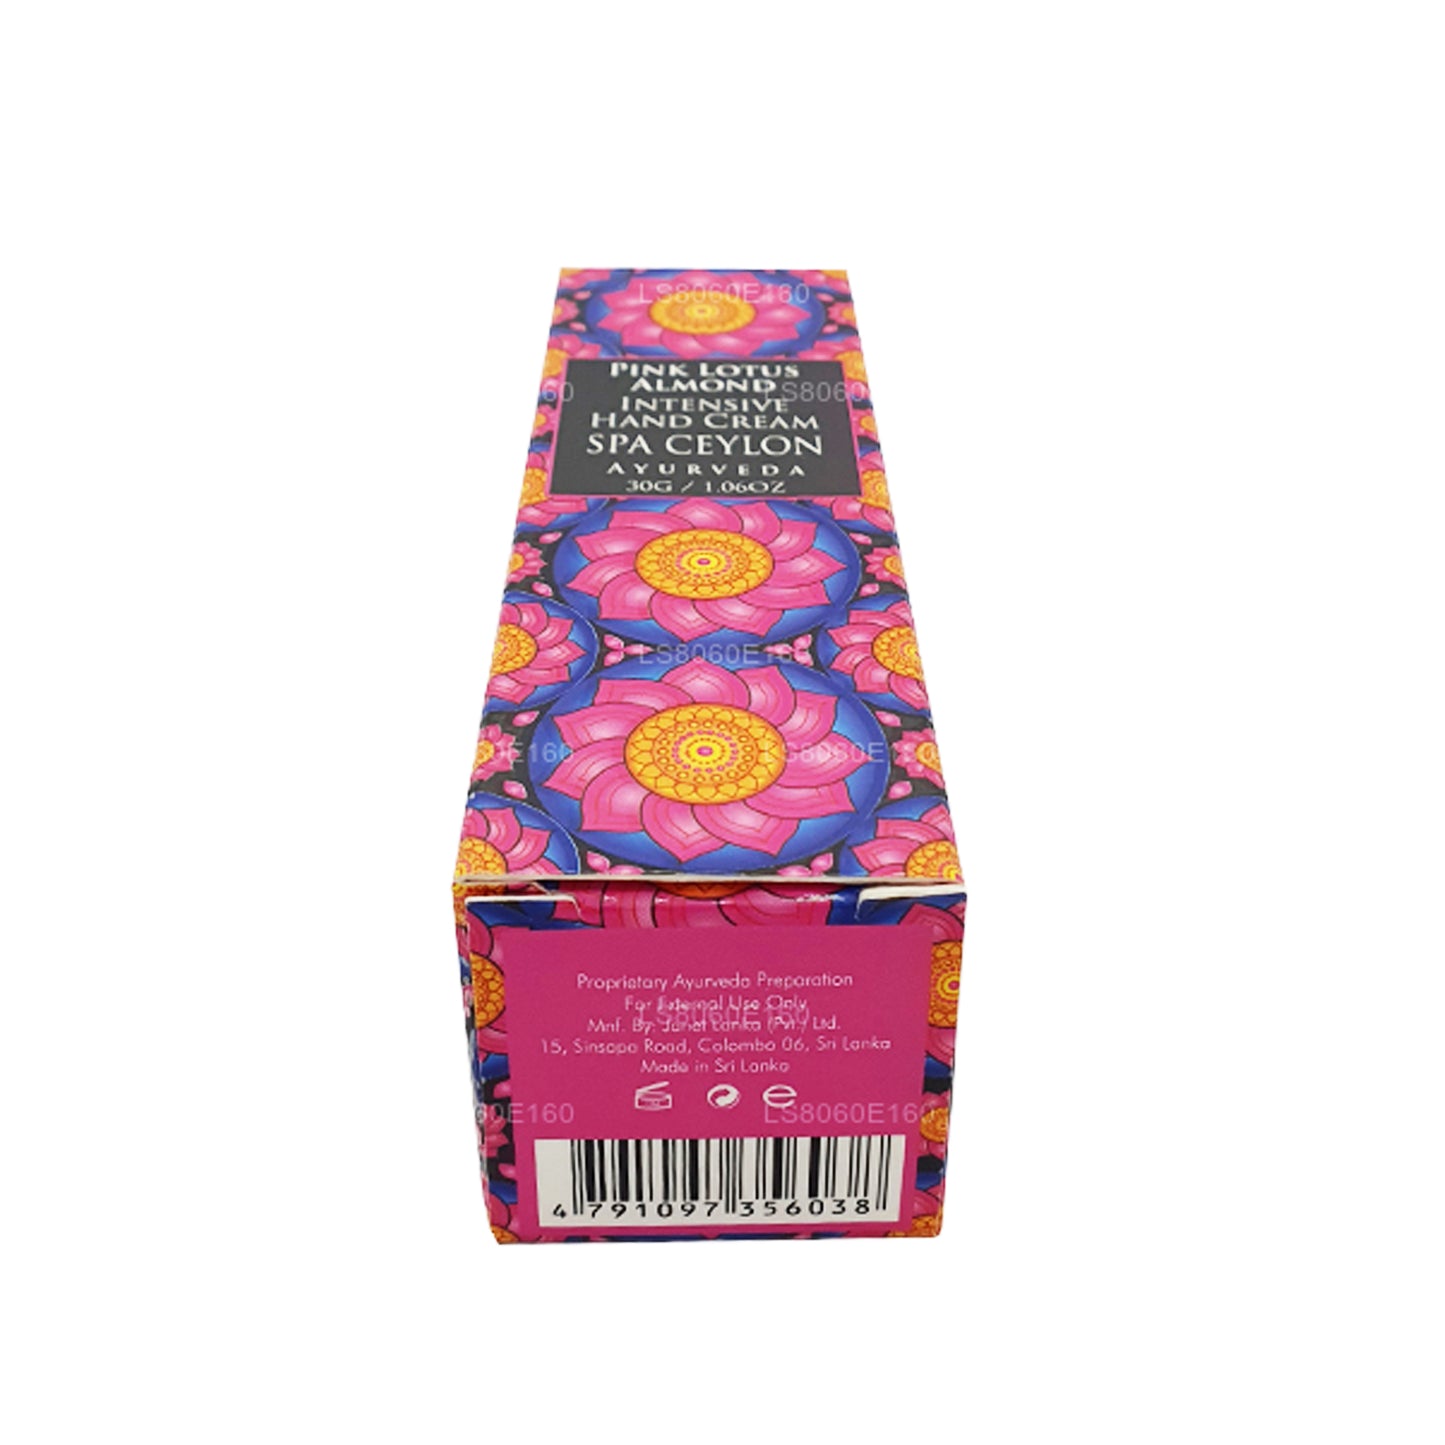 Spa Ceylon Pink Lotus Almond Intensive Hand Cream (30g)